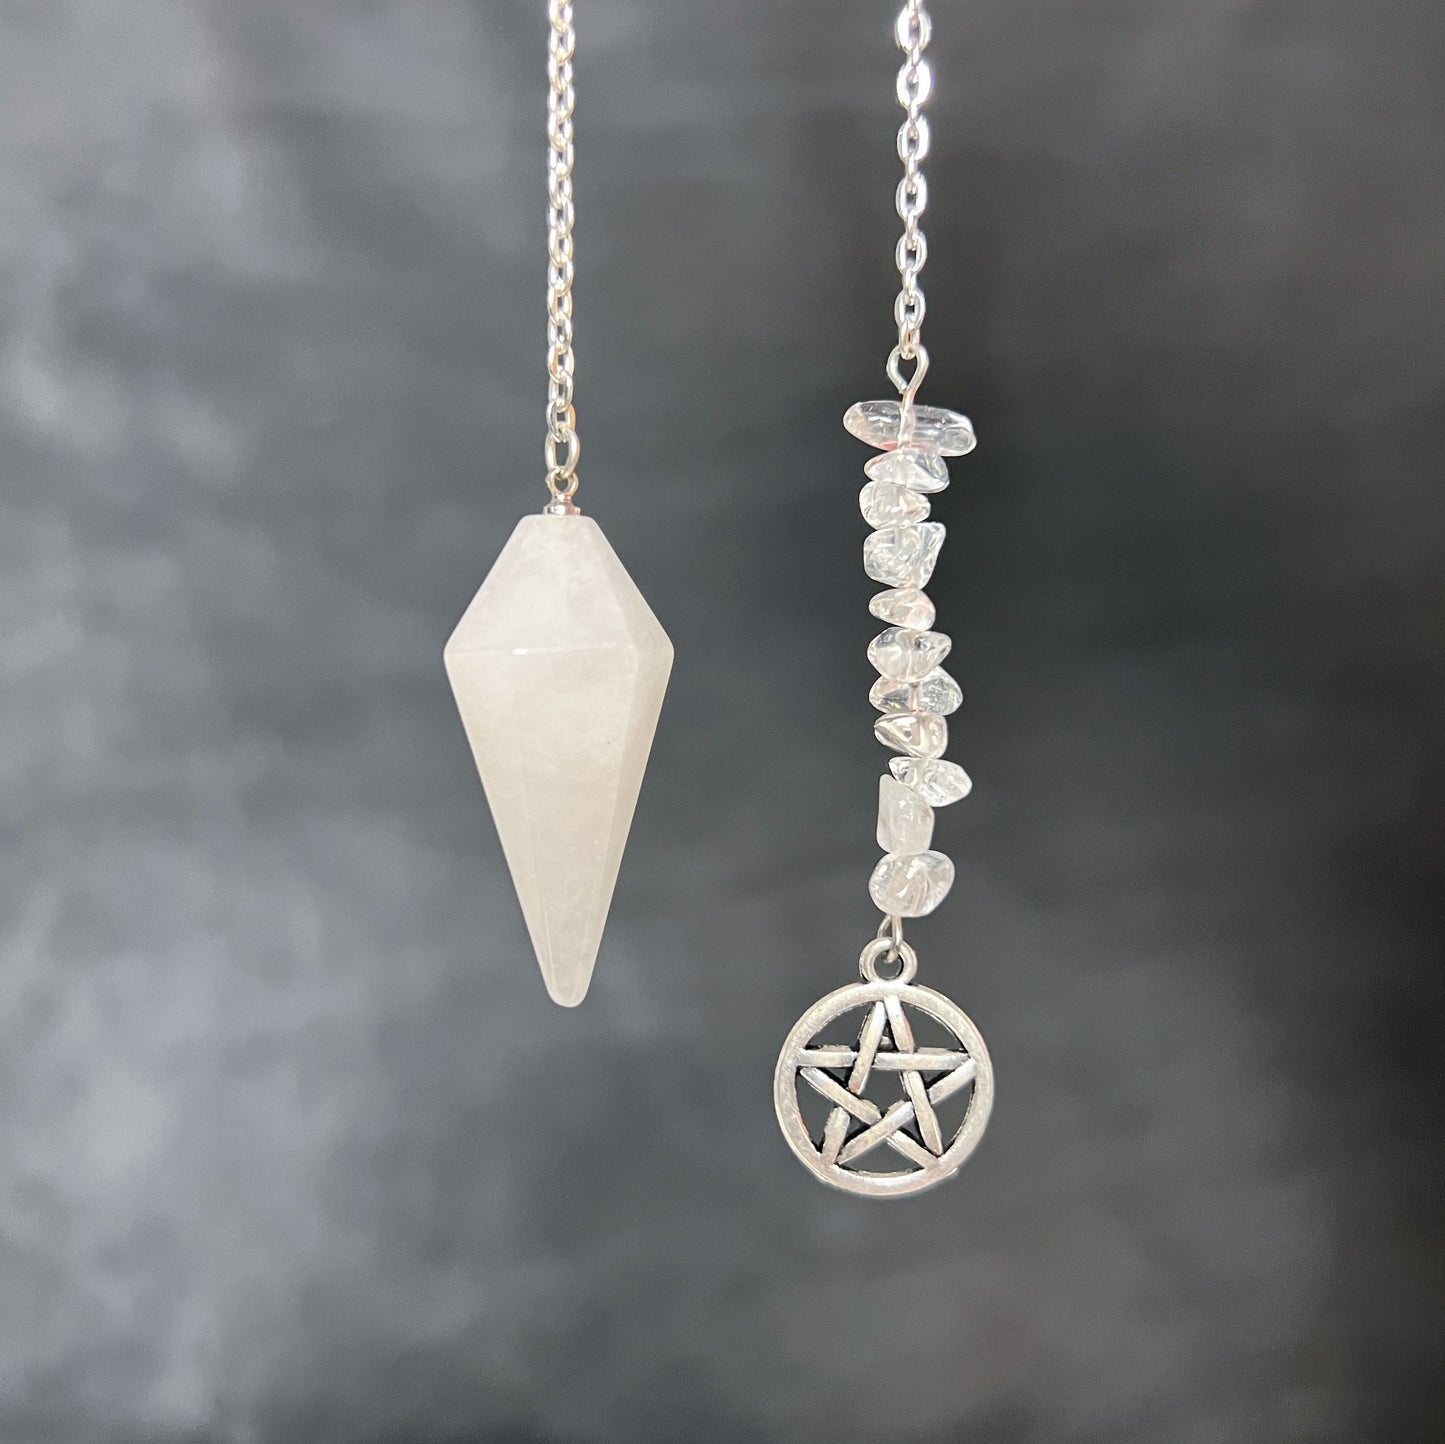 Clear quartz and pagan wiccan pentacle pendulum Baguette Magick